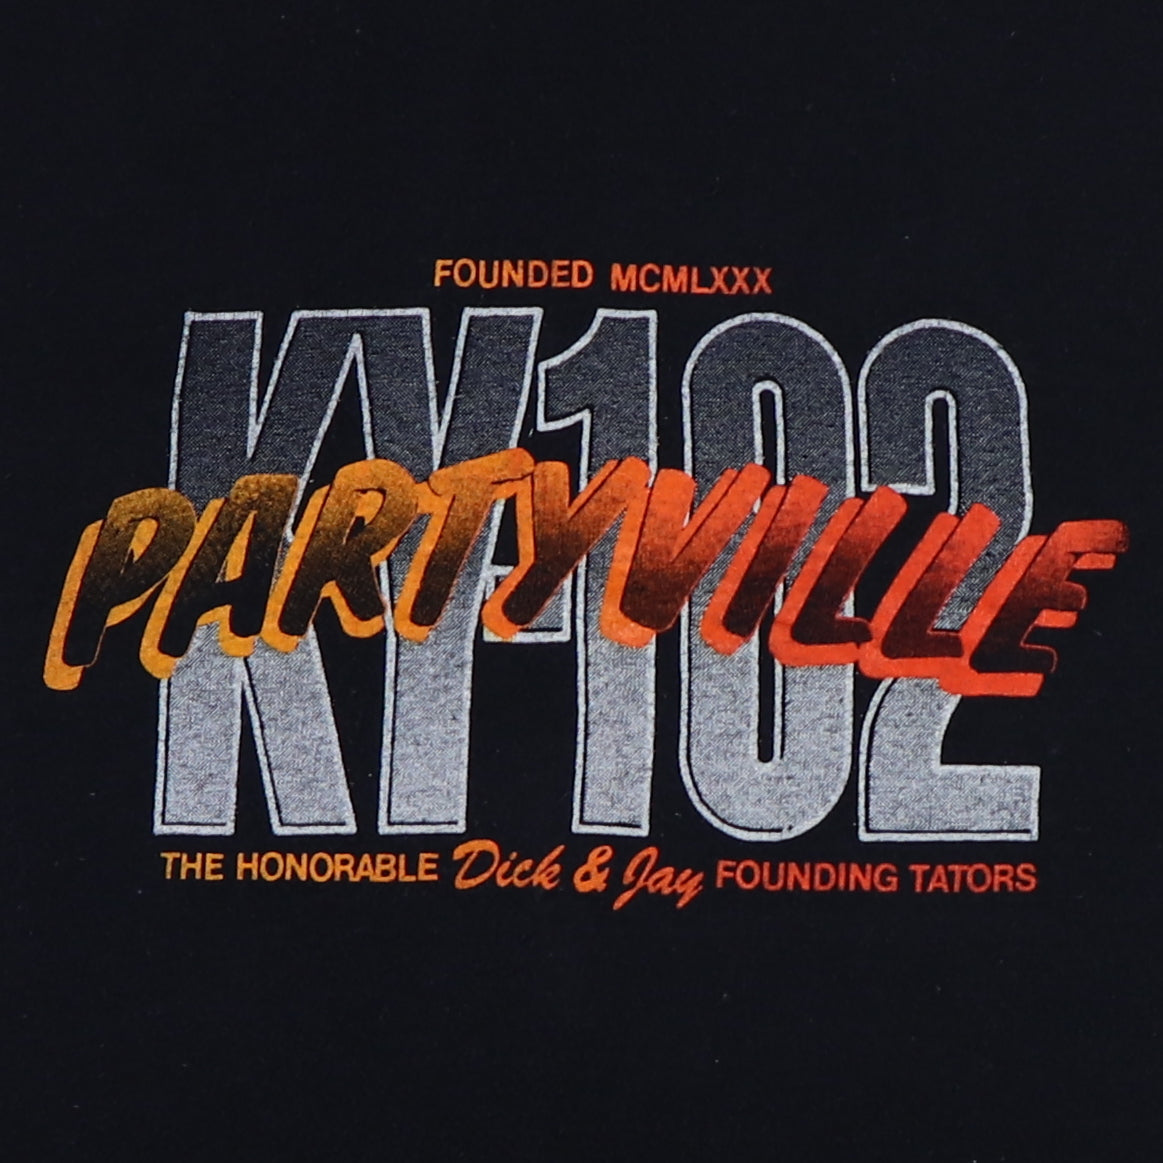 1980s Partyville KY 102 Kansas City Radio Shirt